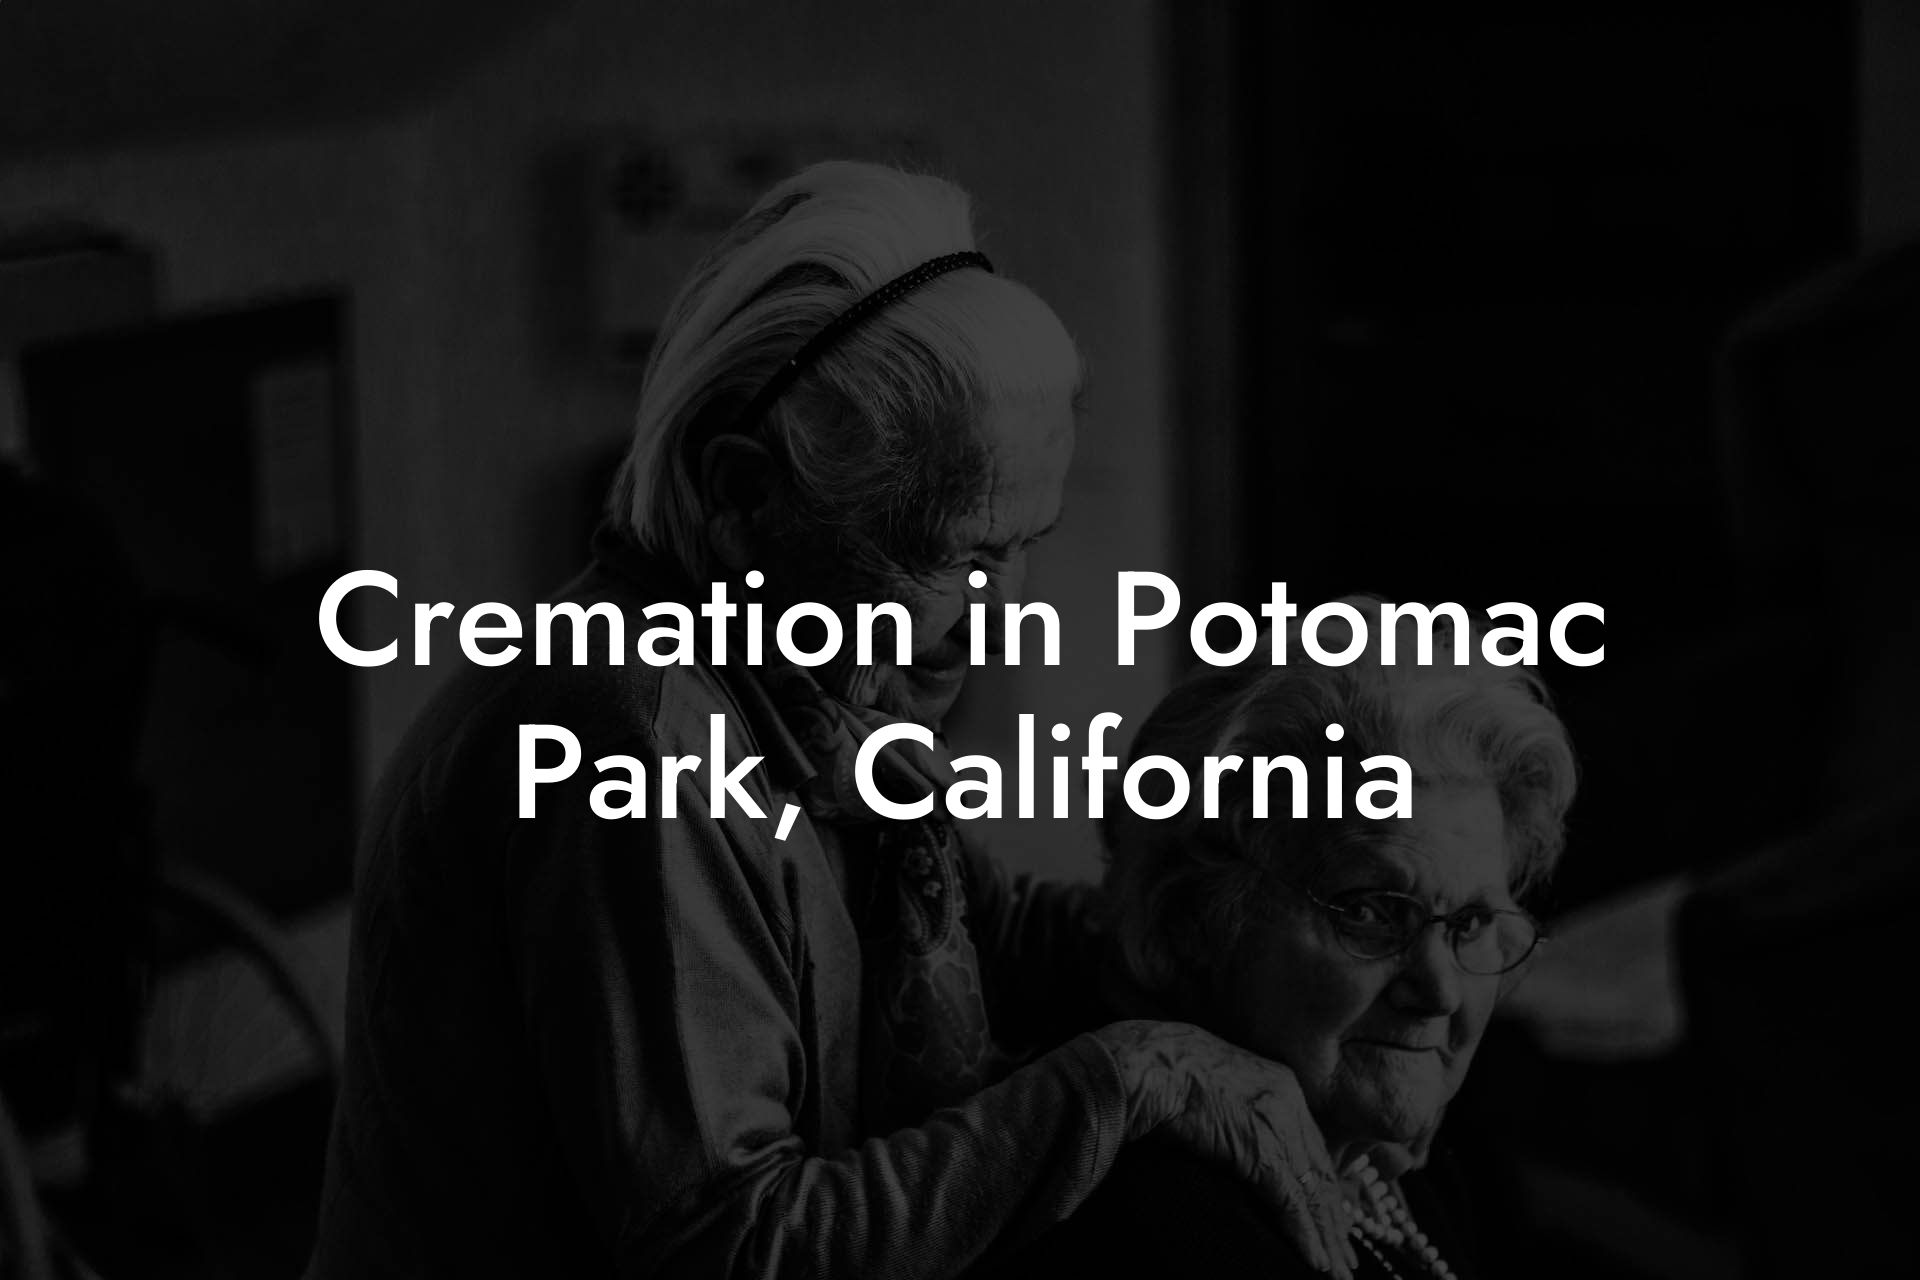 Cremation in Potomac Park, California